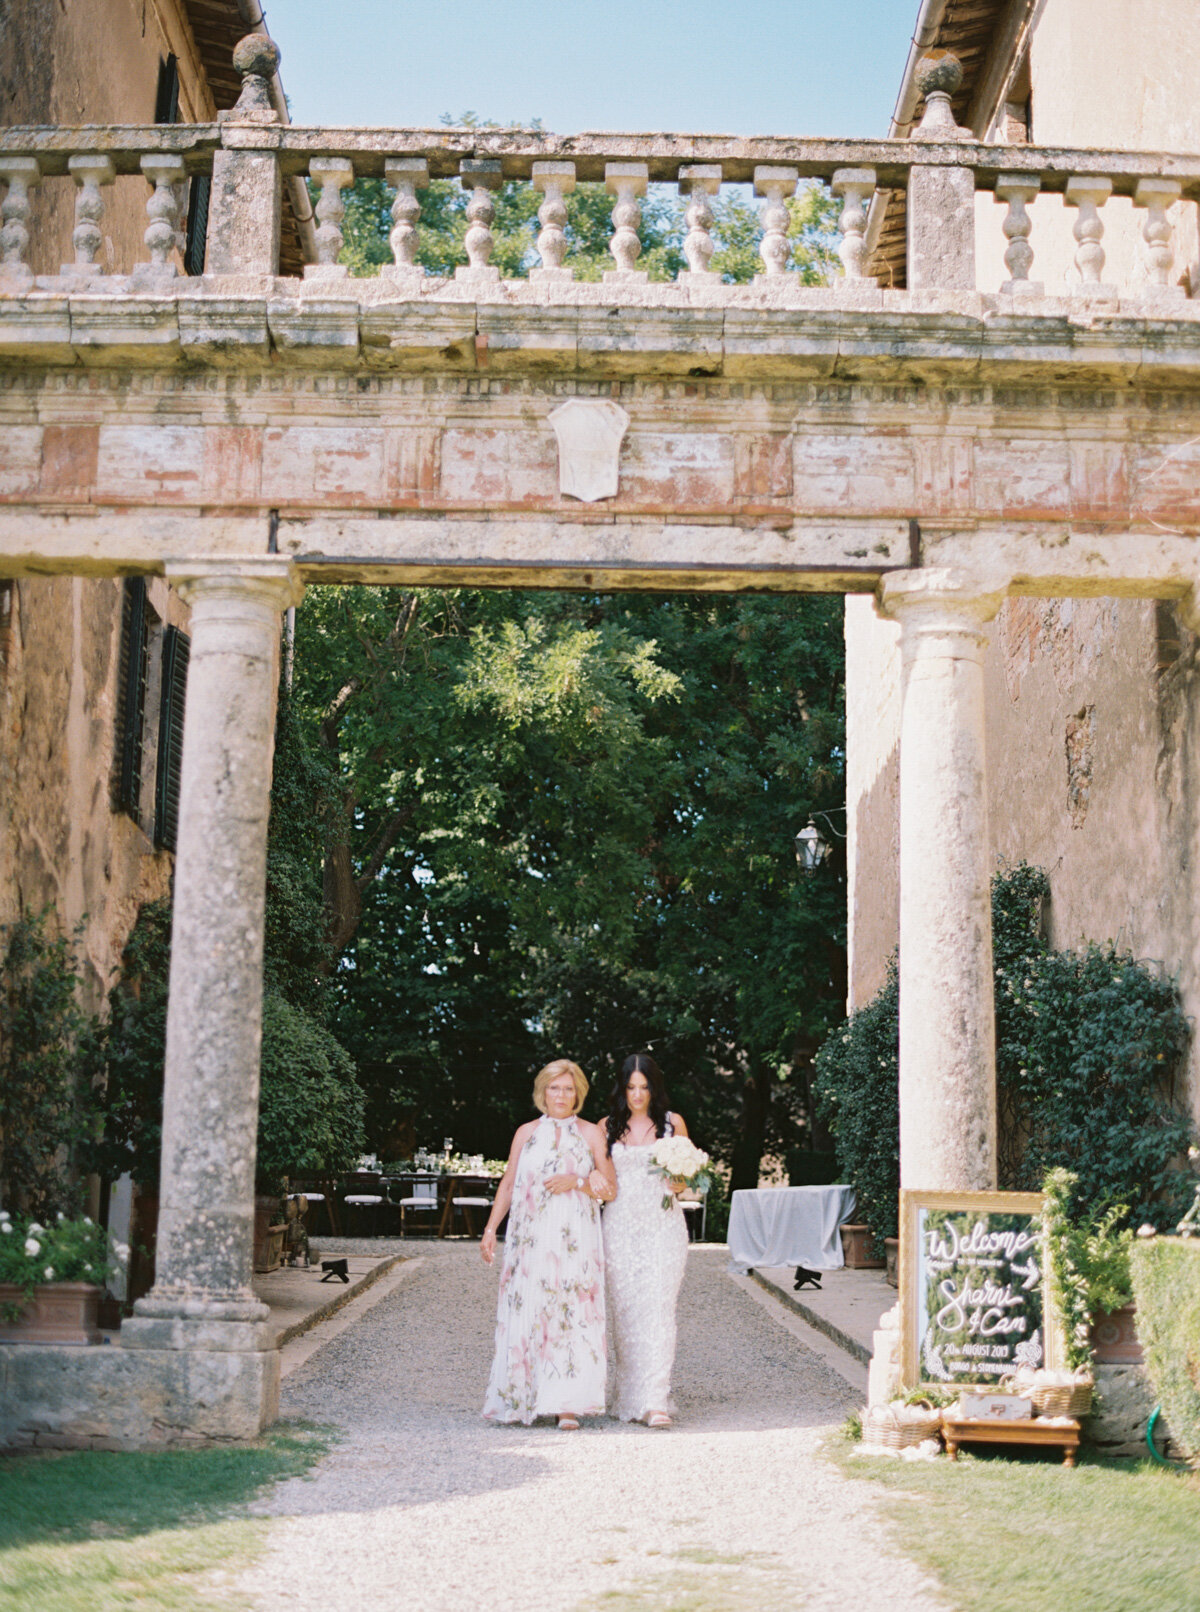 Borgo-Stommenano-Florence-Tuscany-Katie-Grant-destination-wedding (17 of 47).jpg